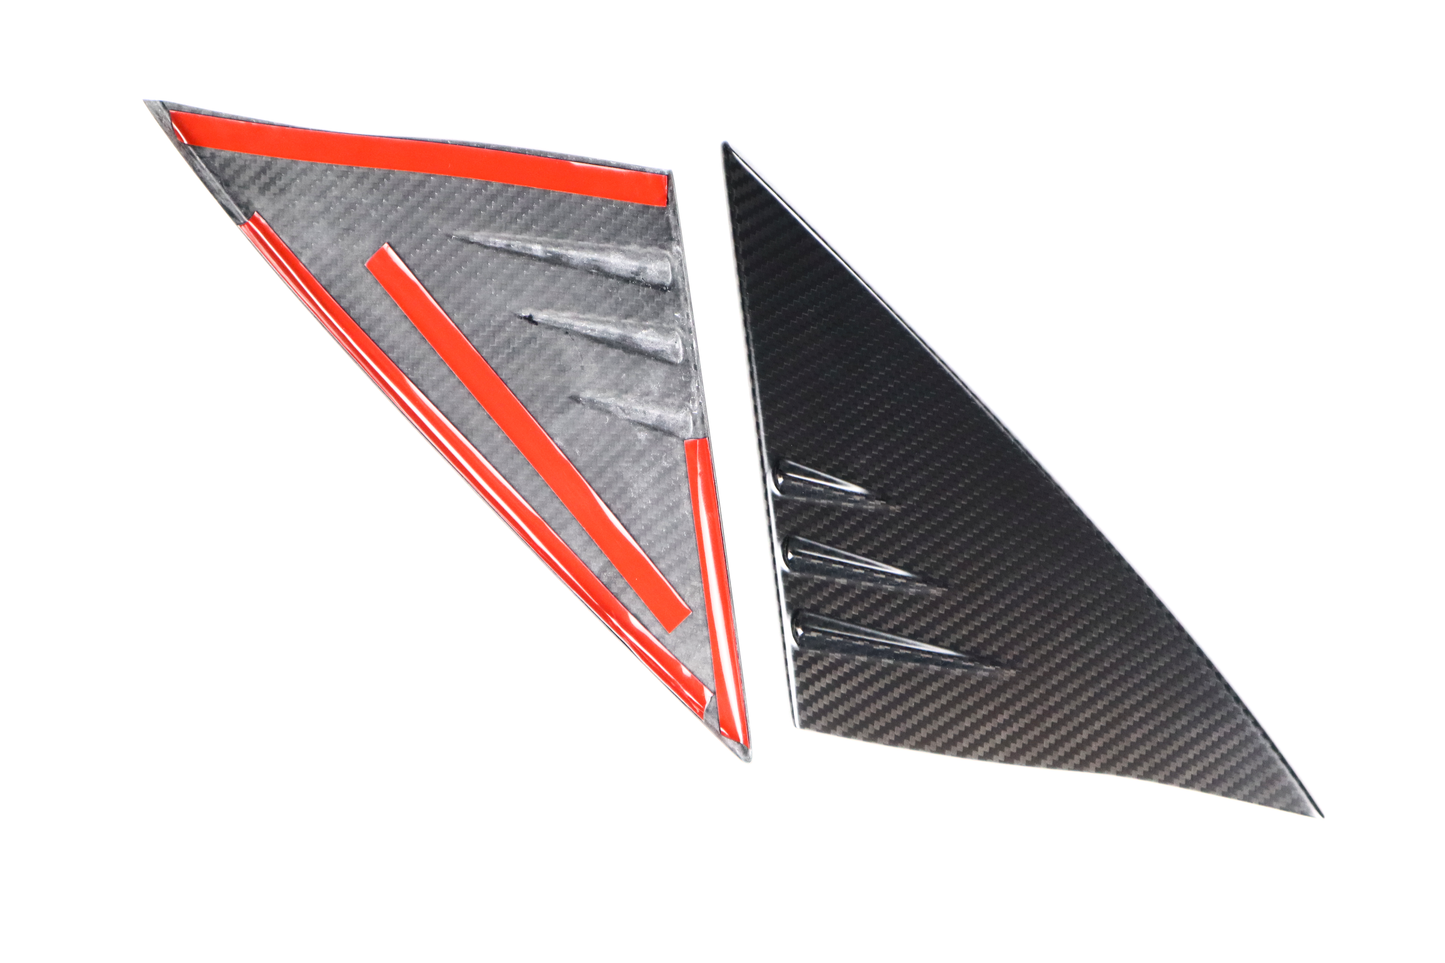 Matt Dry Carbon Fiber A Pilliar Triangle Decoration Trims 2 Pcs For Tesla Model Y 2017+